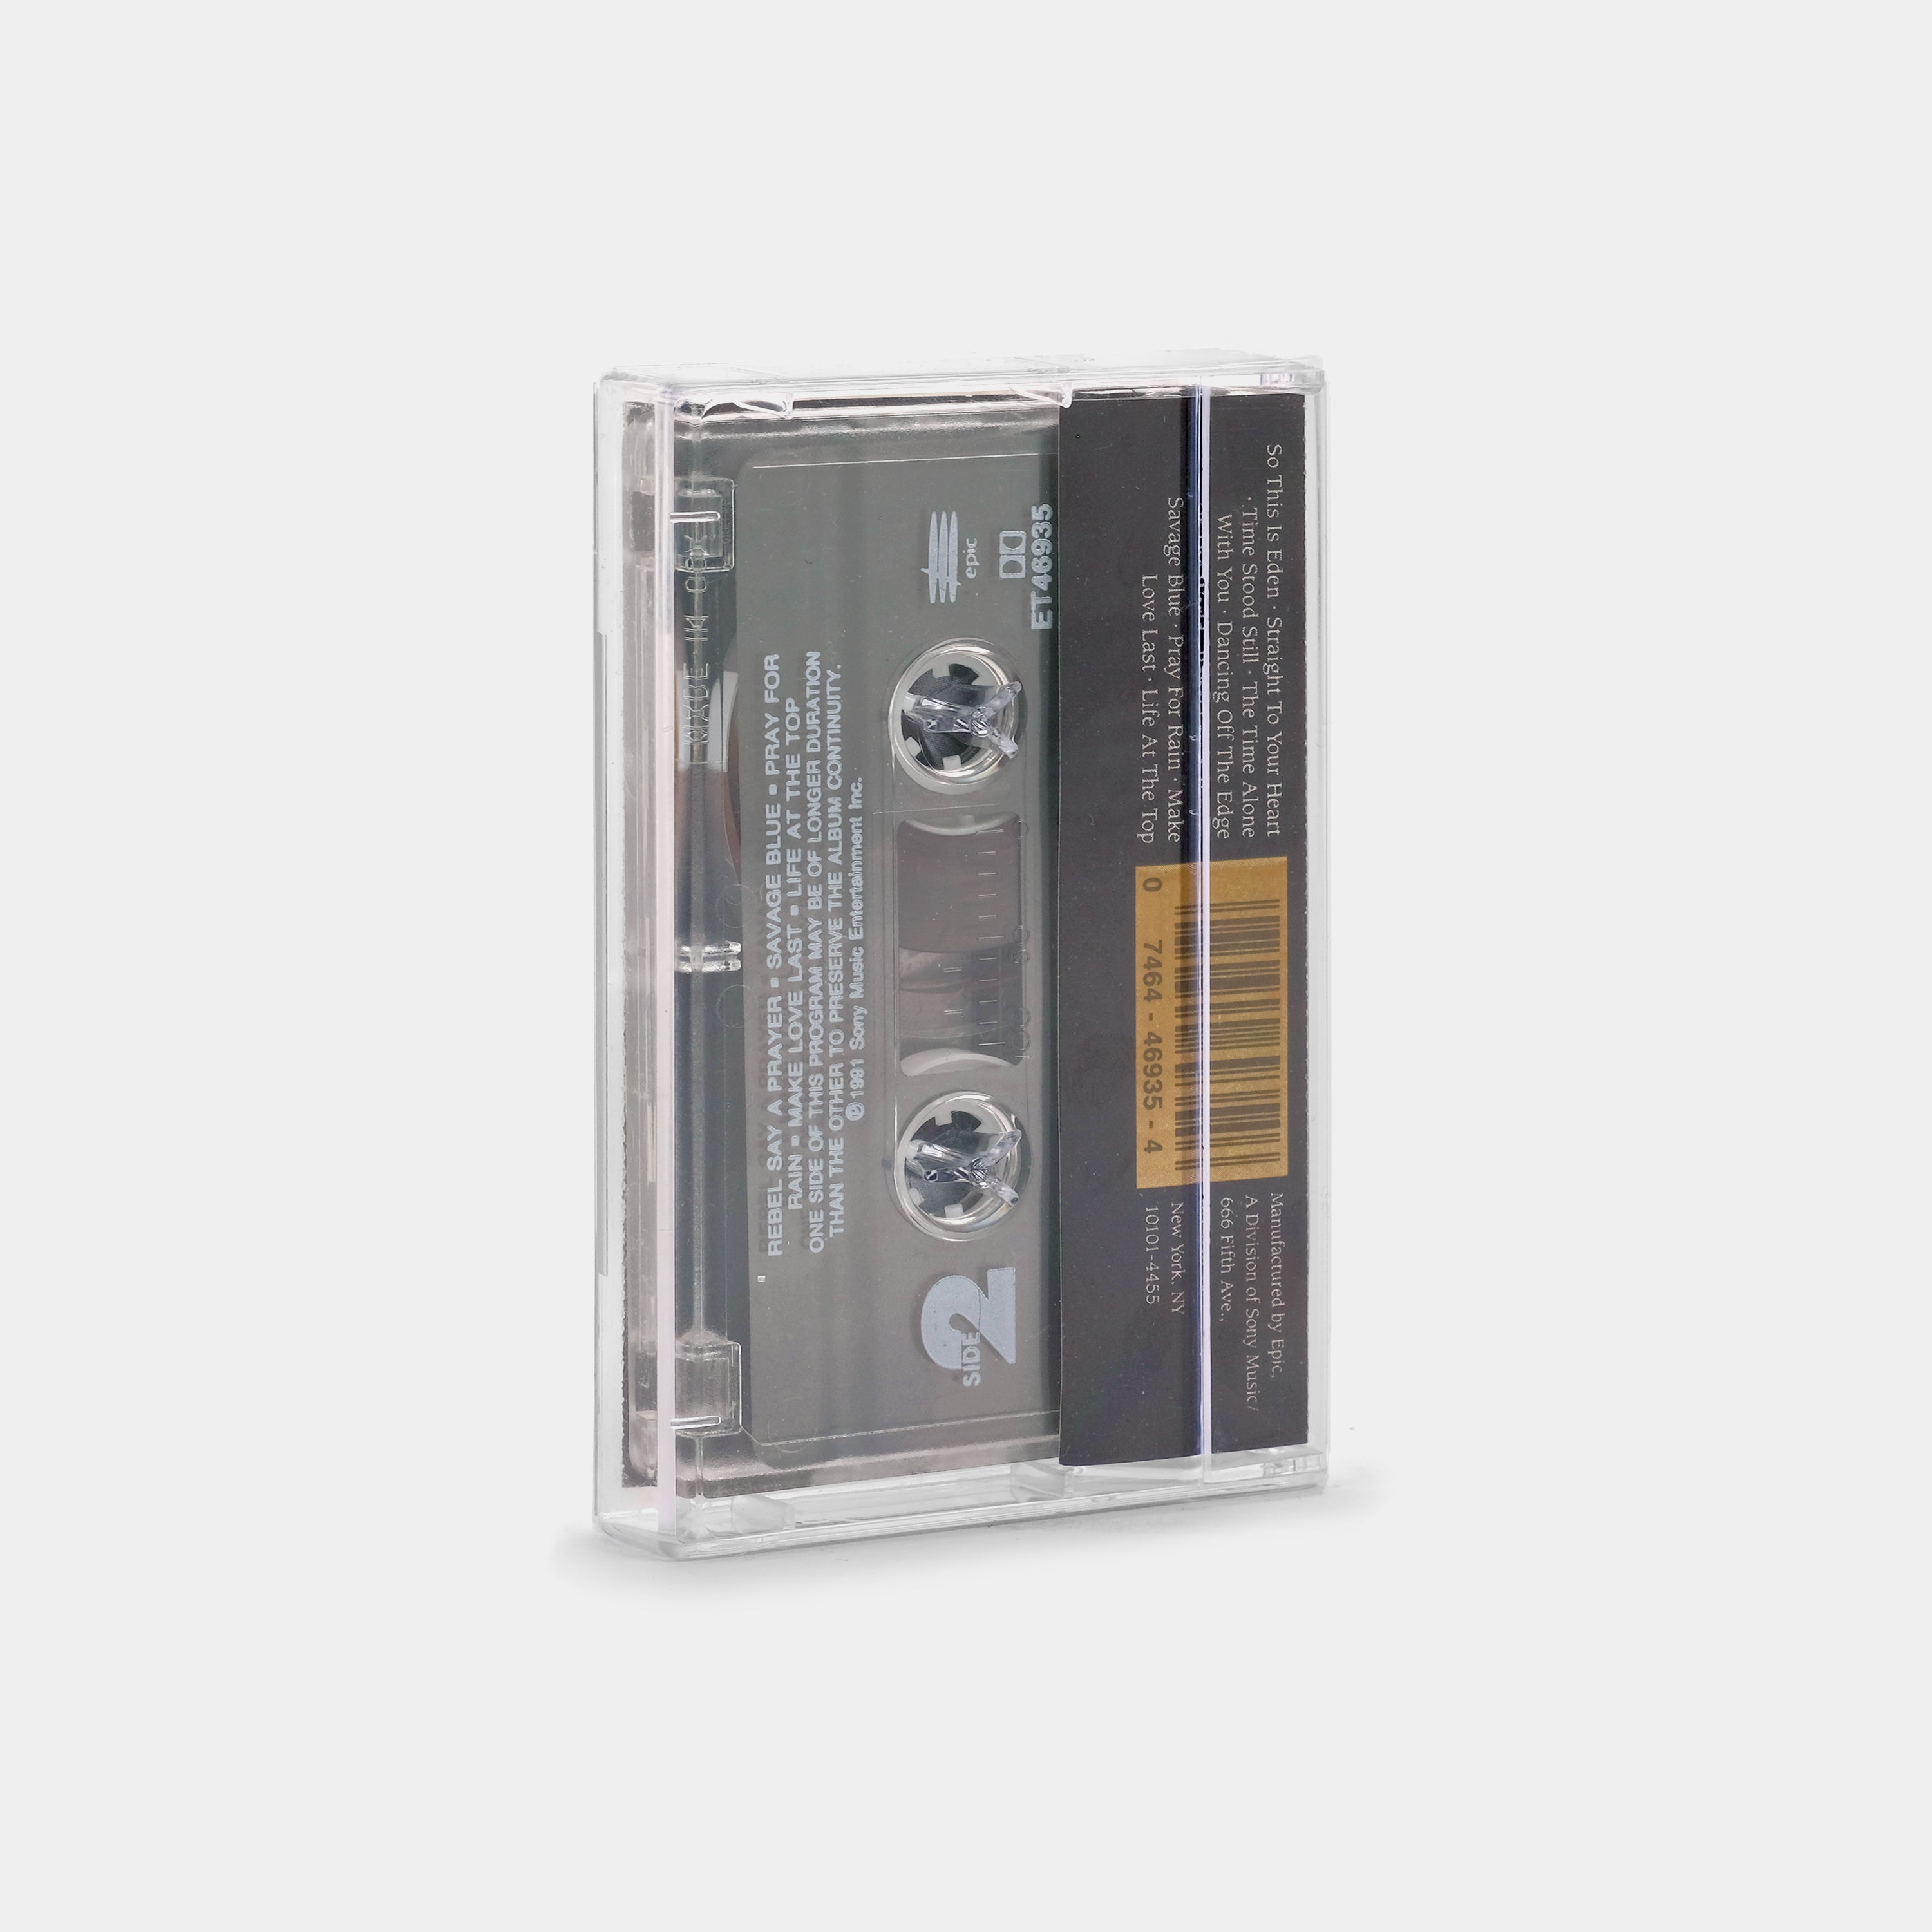 Bad English - Backlash Cassette Tape